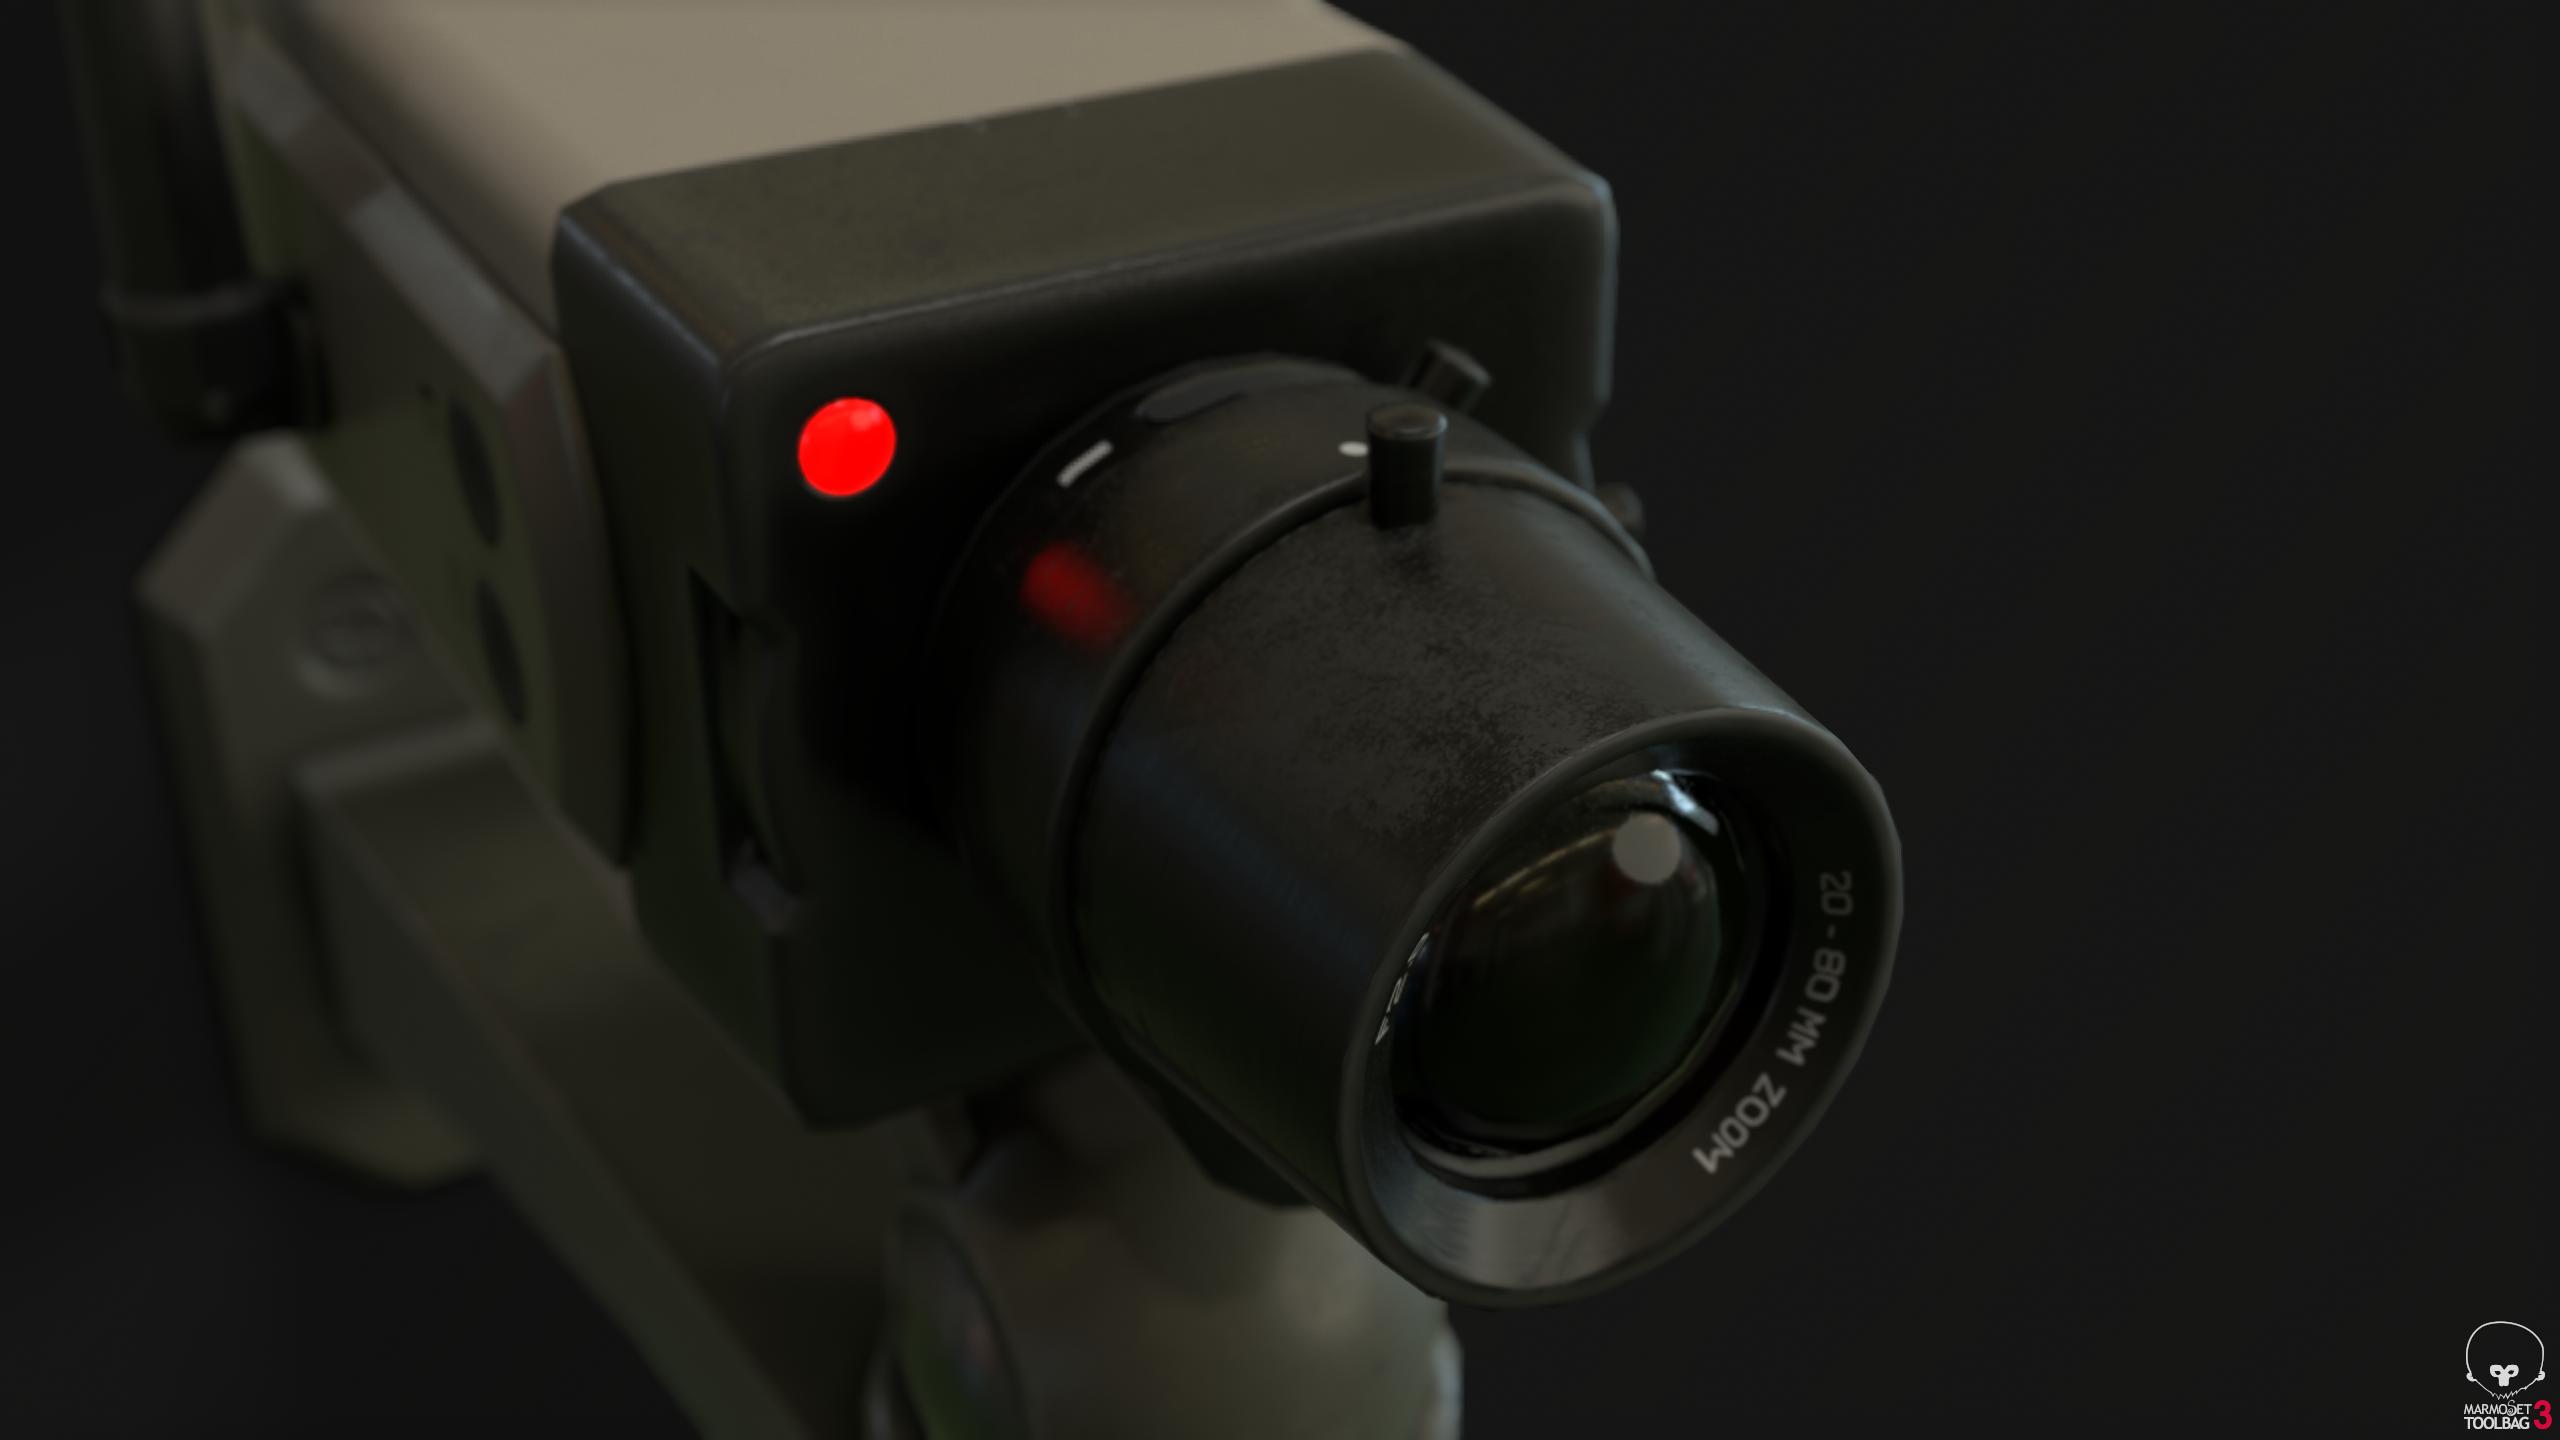 Closeup render of a small security camera